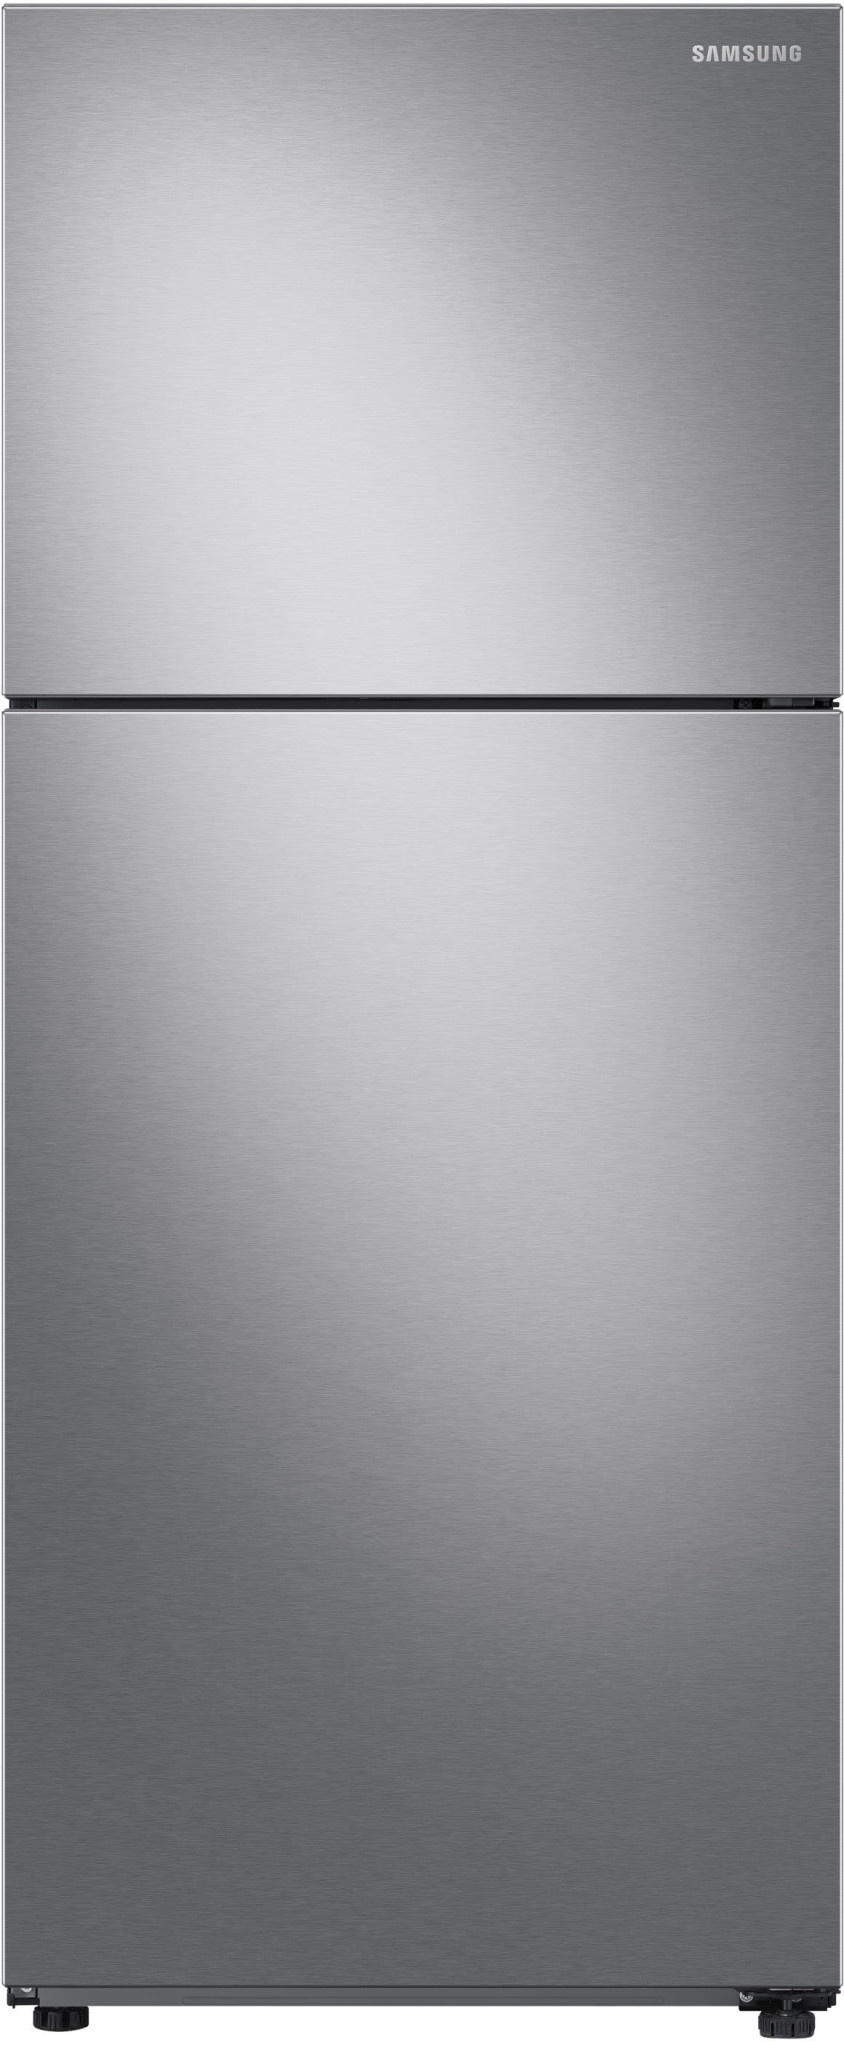 Samsung *Samsung  RT16A6195SR  15.6 cu. ft. Top Freezer Refrigerator in Stainless Steel, Standard